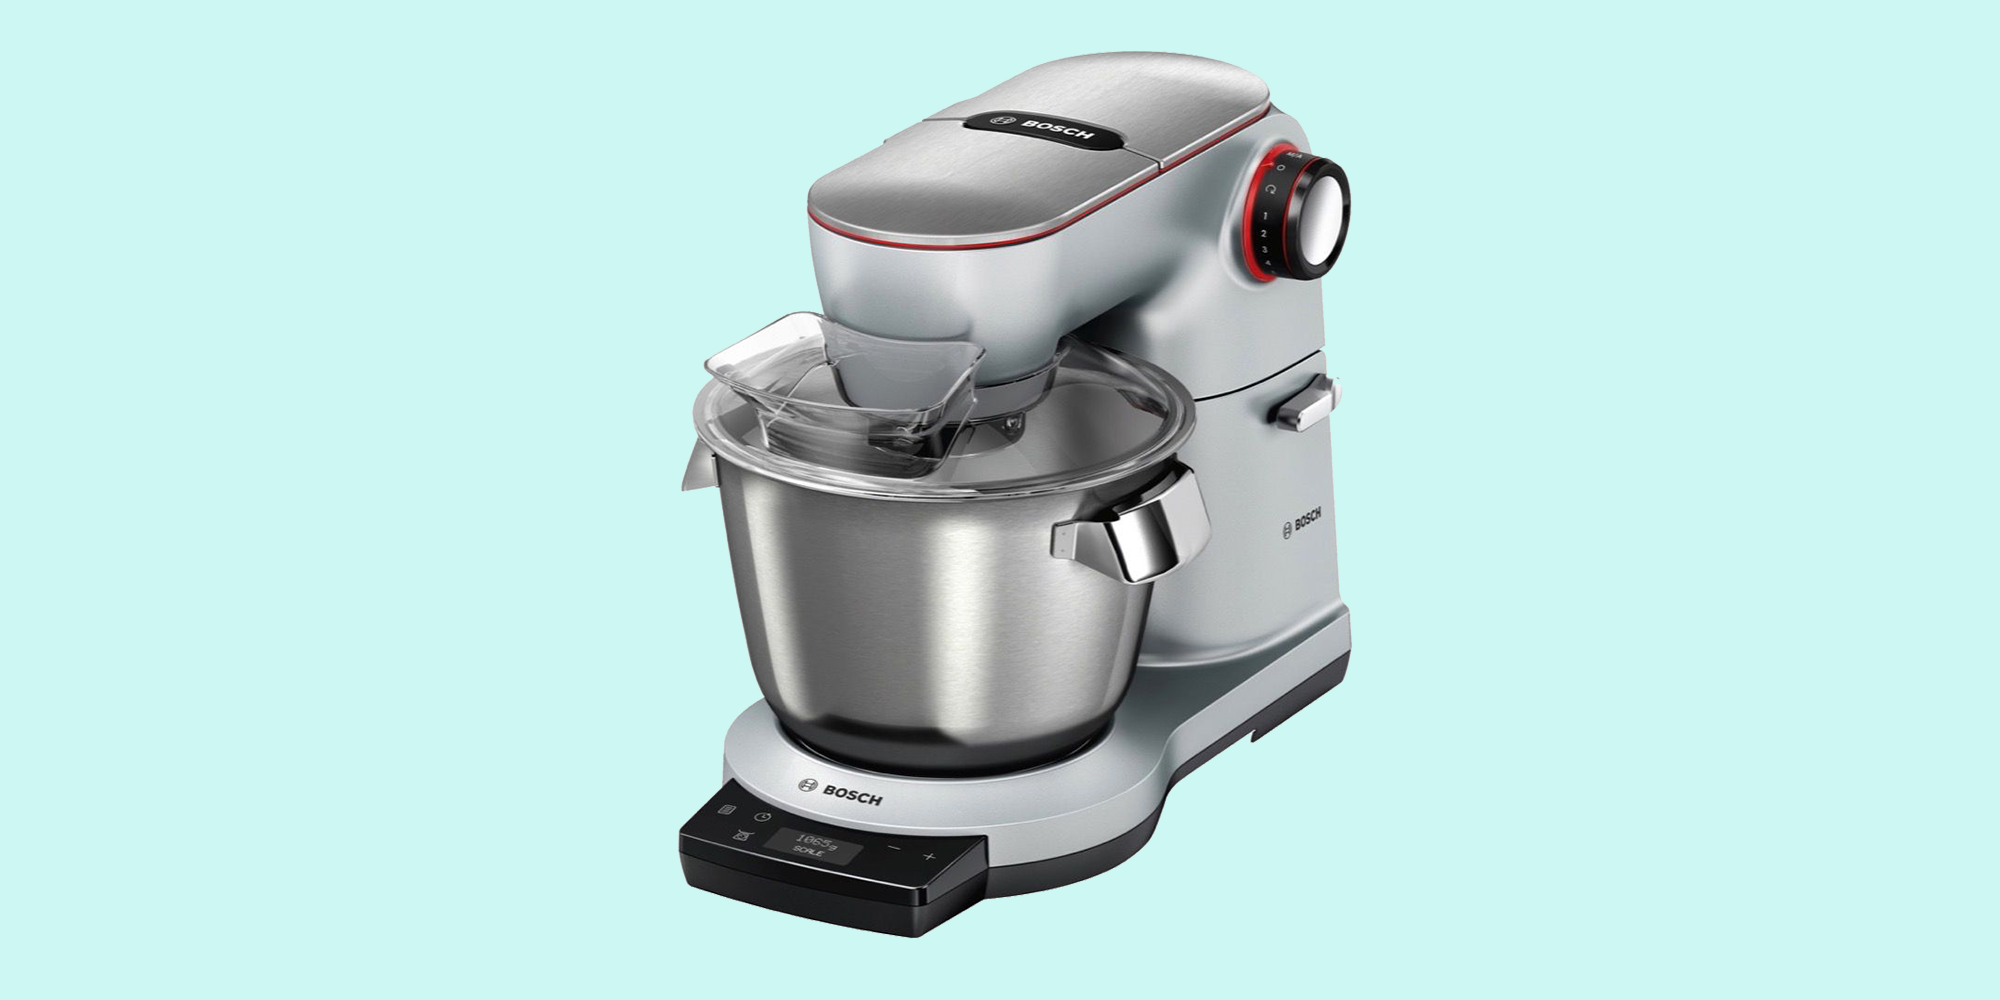 Bosch Optimum Kitchen Machine Mum9gx5s21 Review